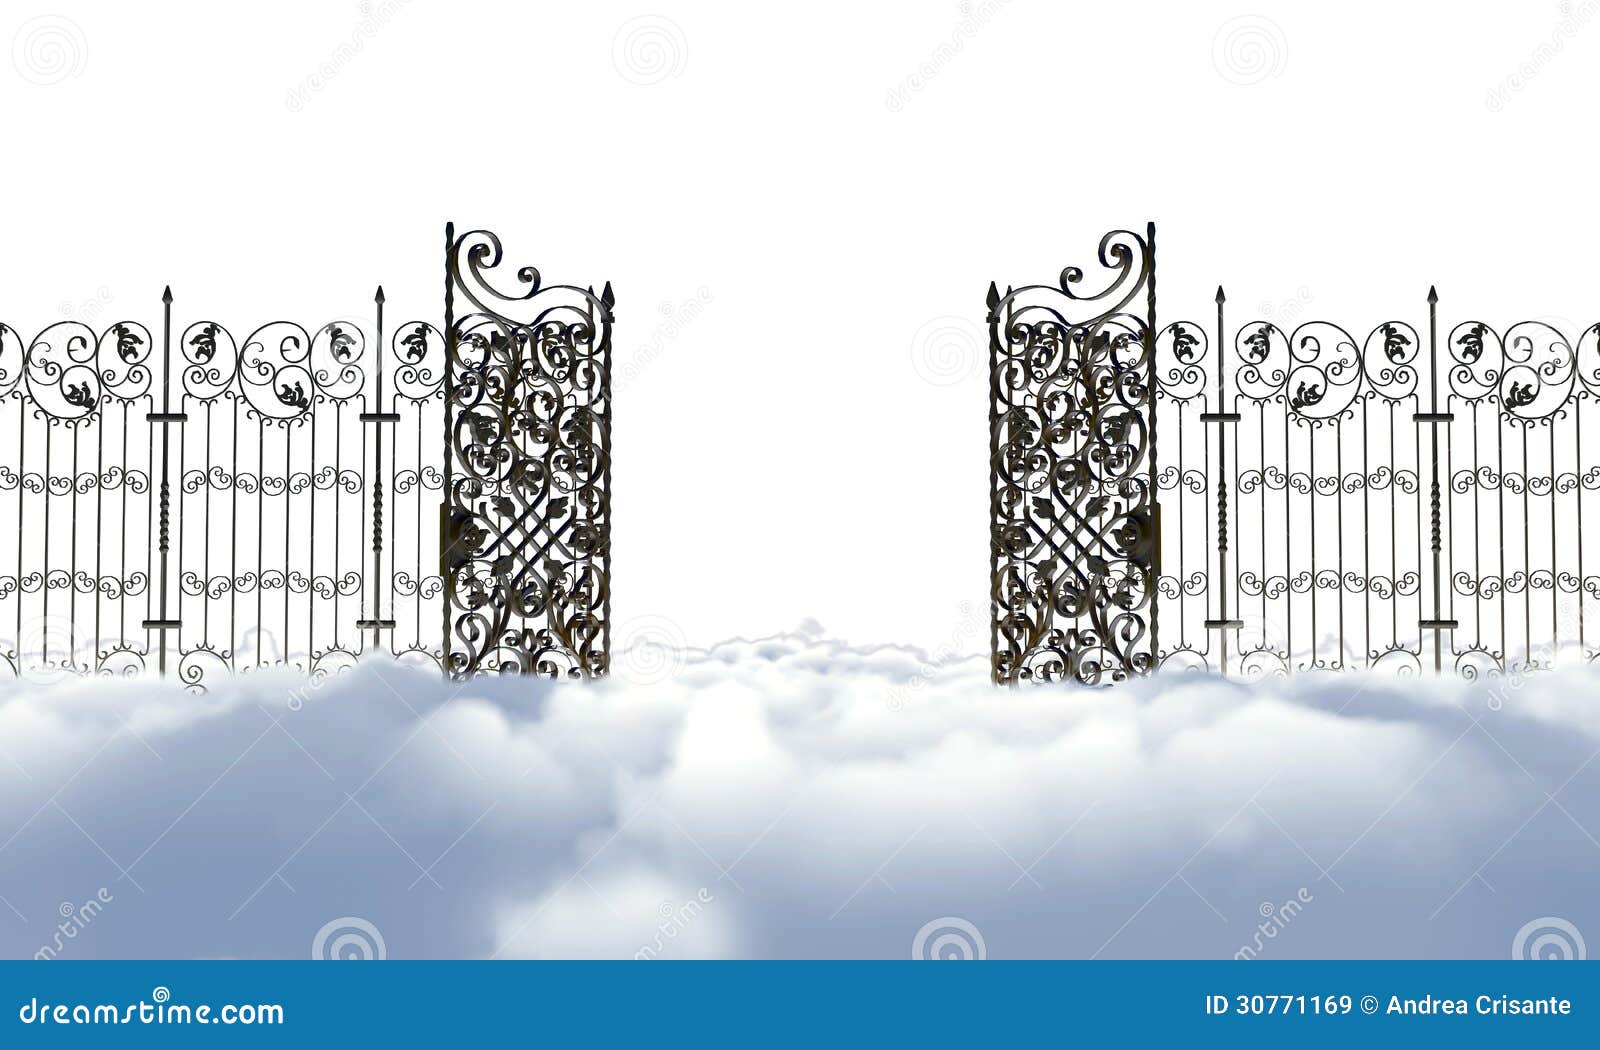 gates of heaven clipart - photo #13